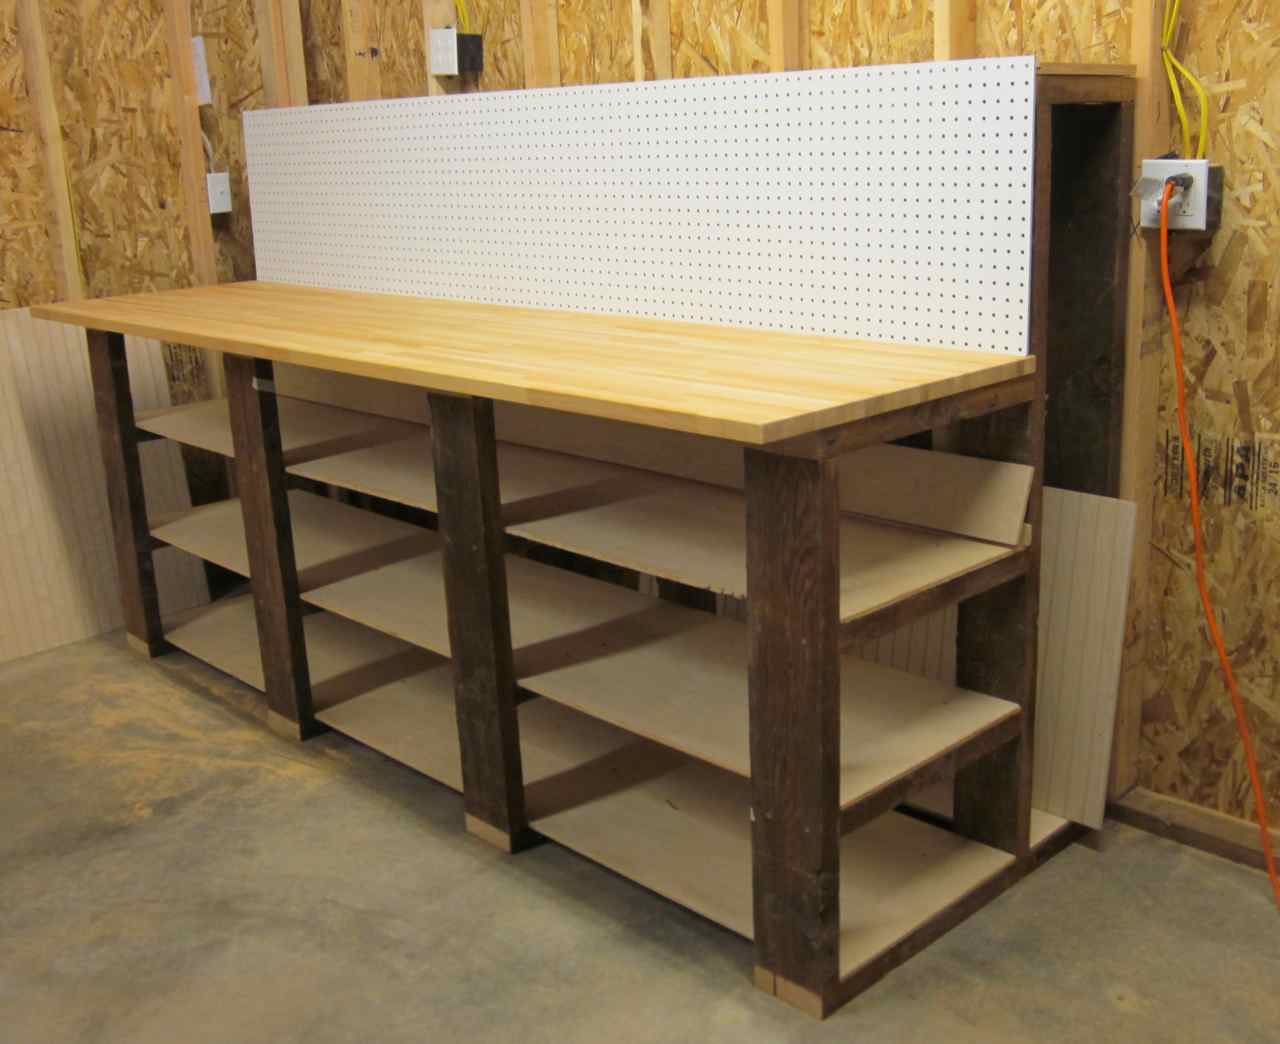 Laurelhurst Craftsman Bungalow: We Built a Workbench